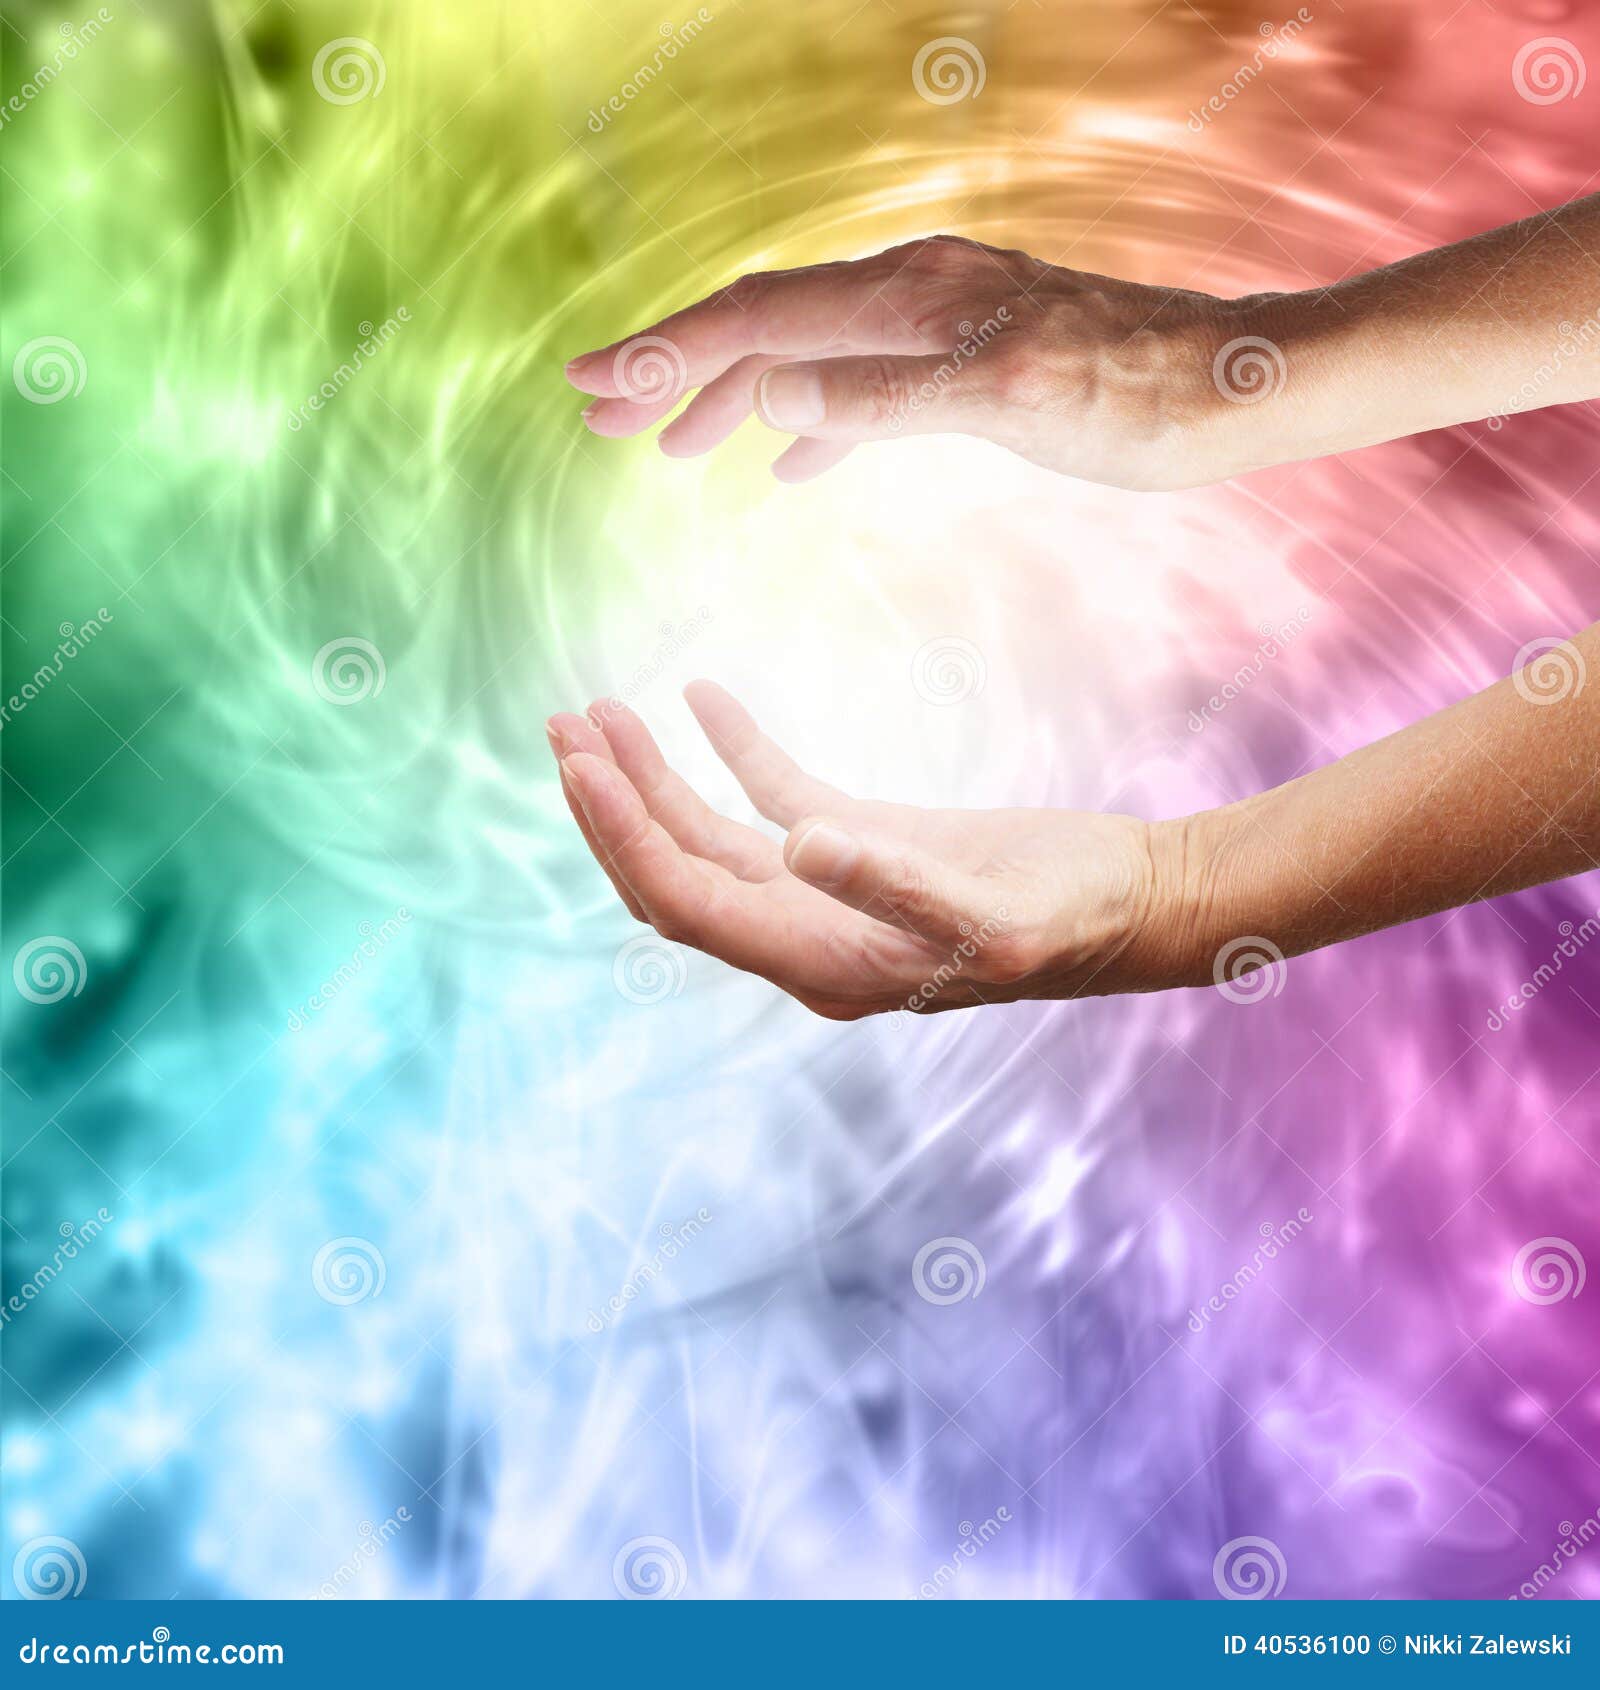 healing hands with vibrant rainbow vortex